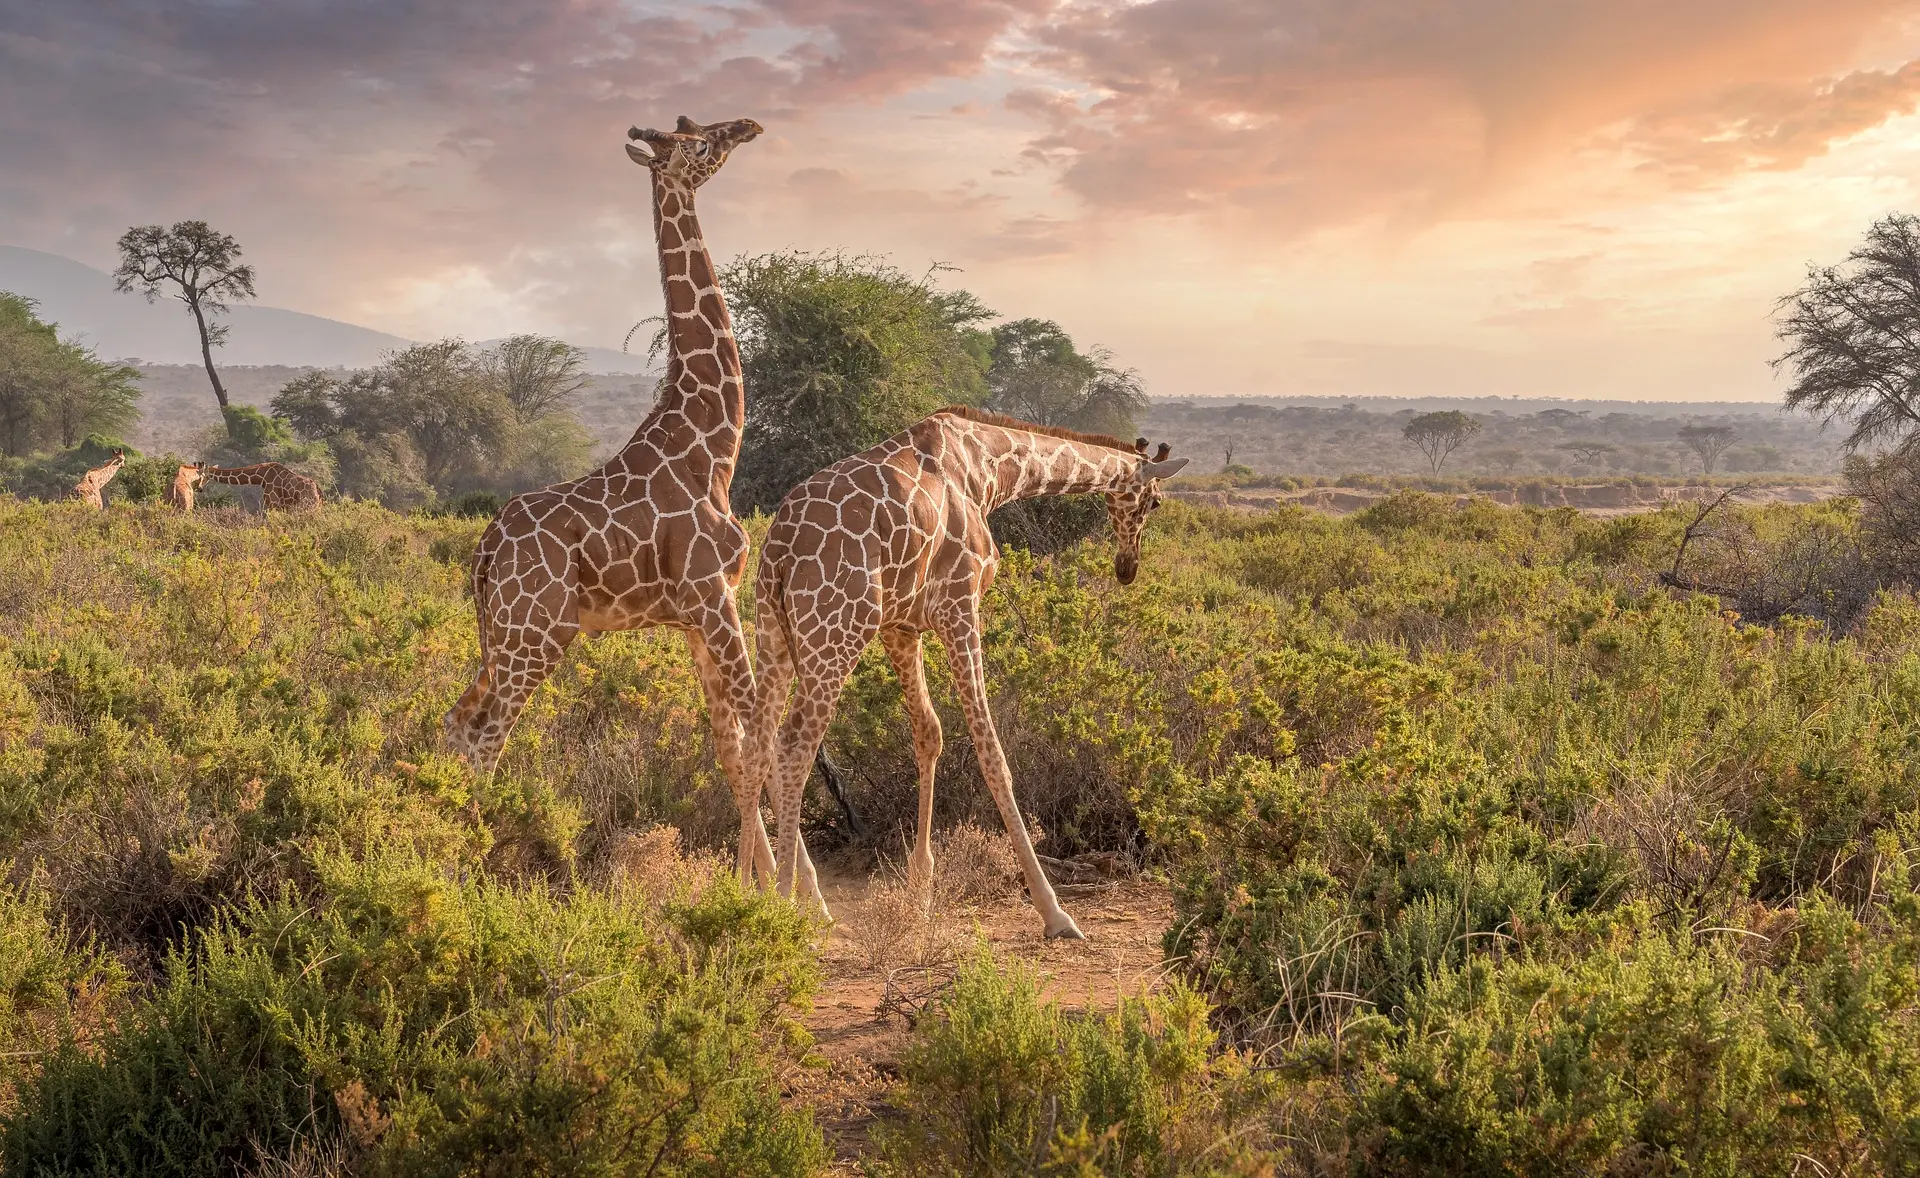 Southern African safari tours